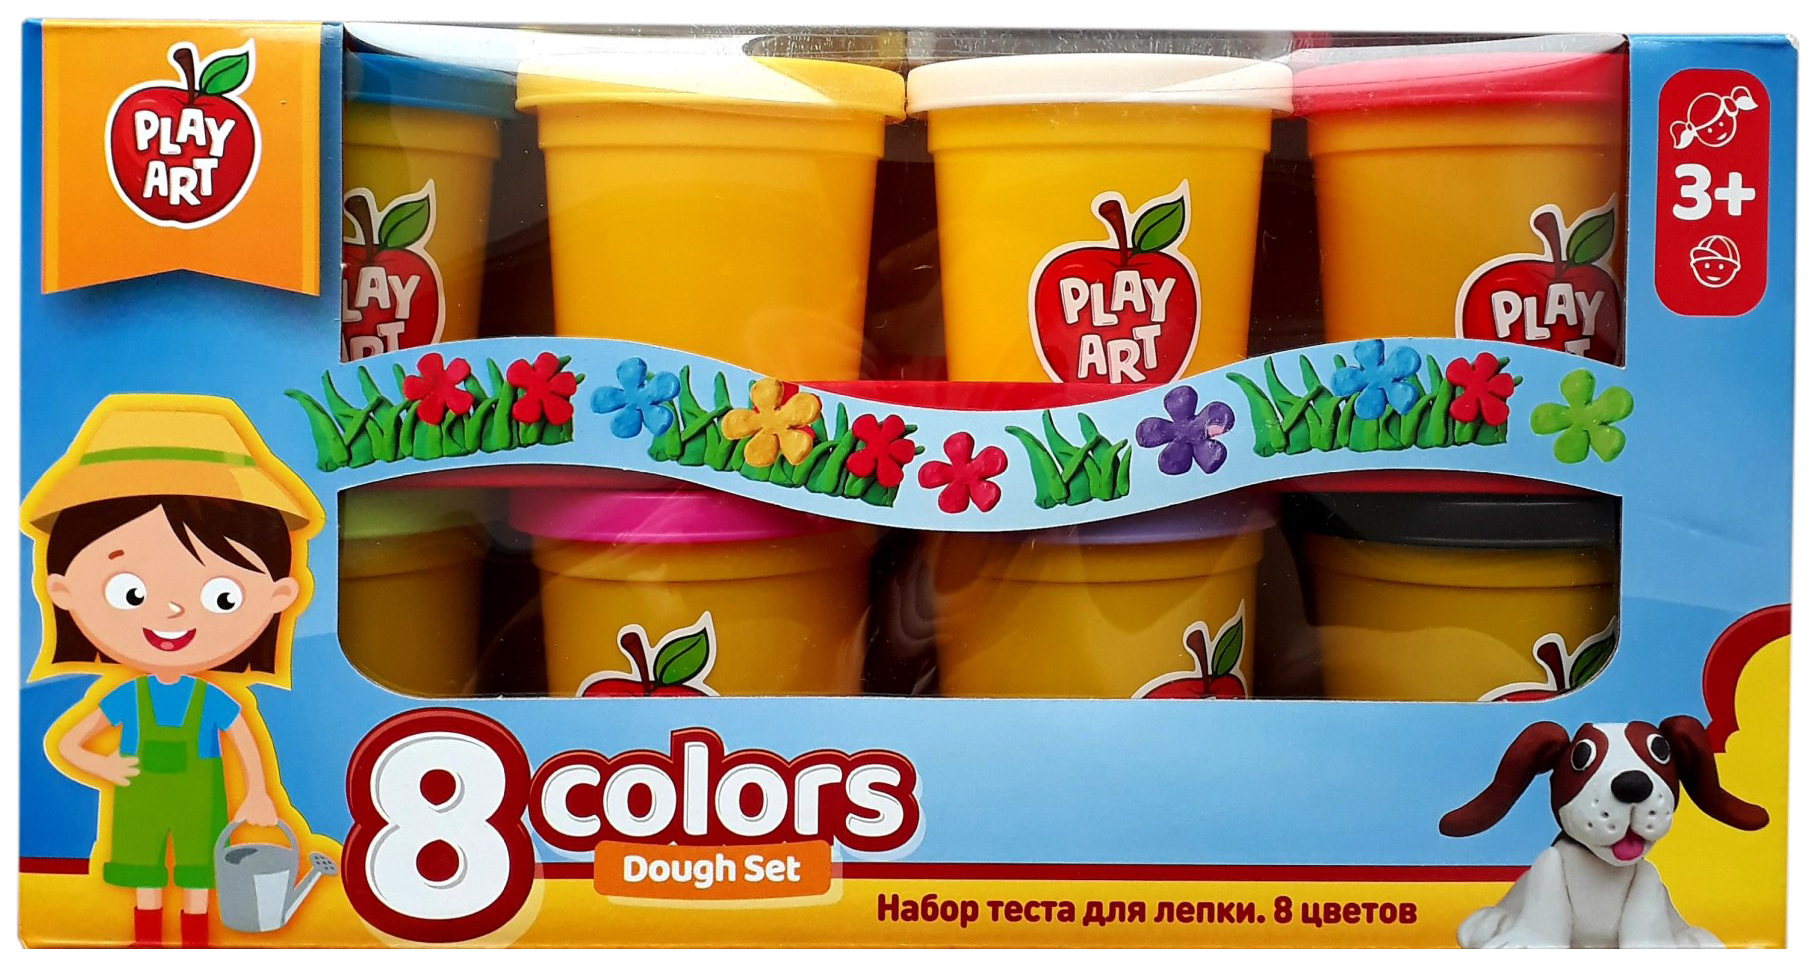 фото Набор теста для лепки "play art", 8 цветов, арт. pa-3282